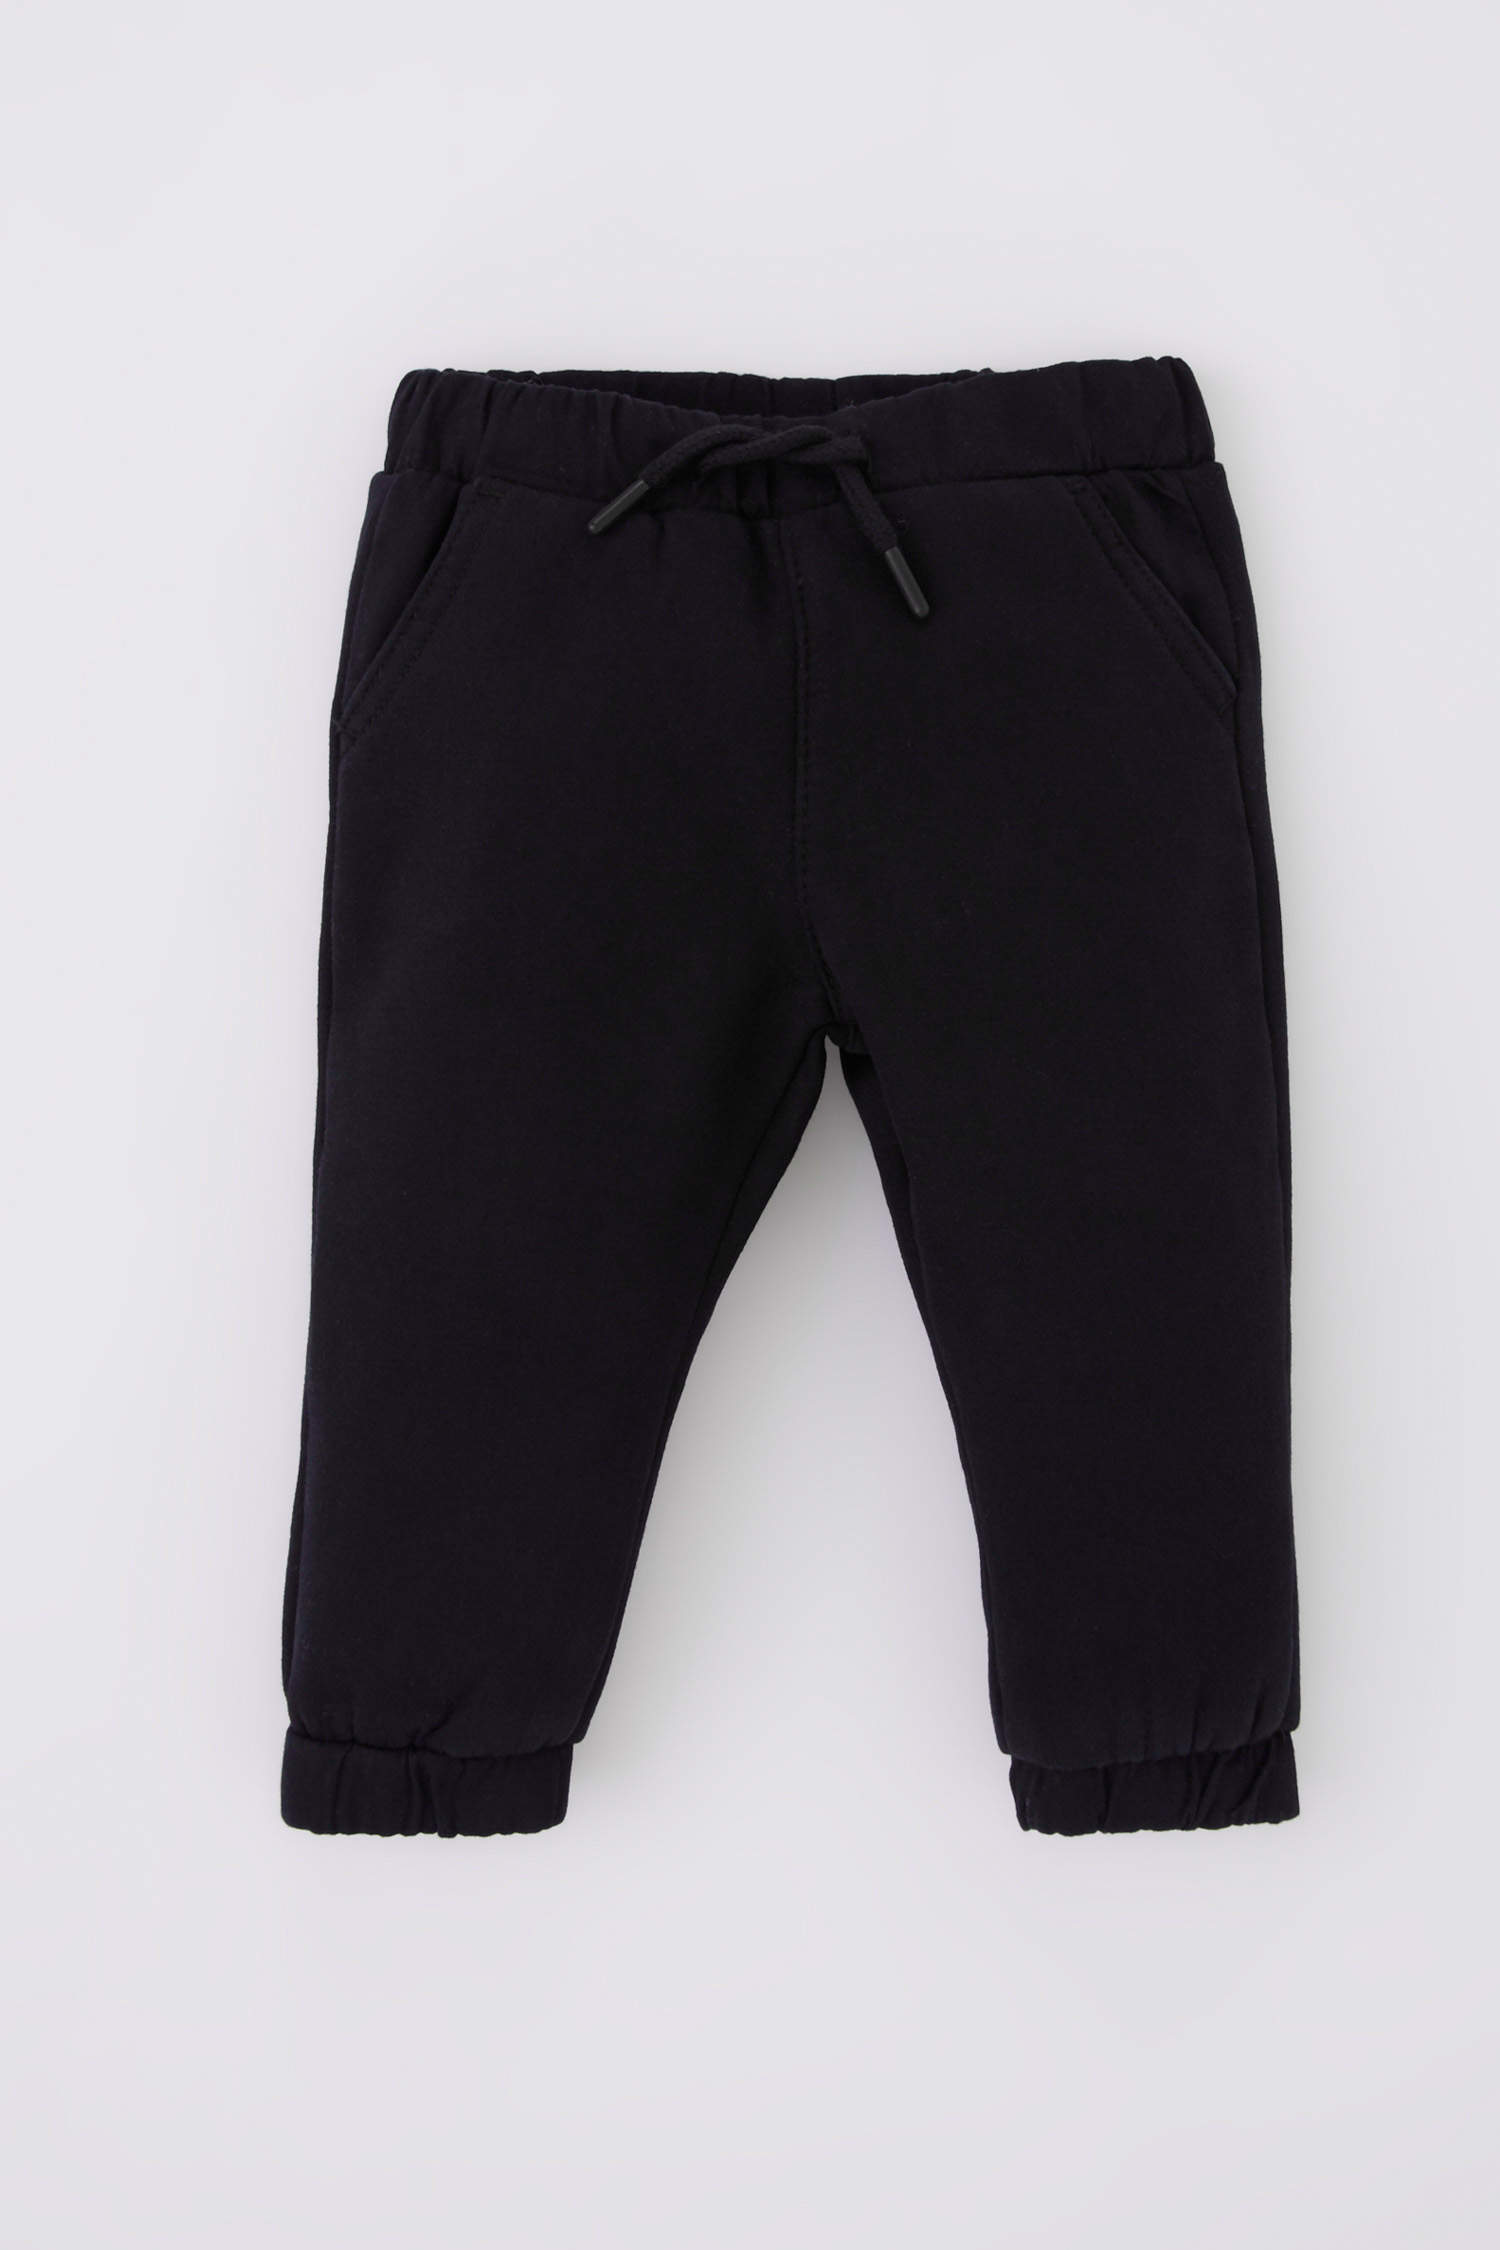 Buy Black  White Trousers  Pants for Infants by PINK N BLUE Online   Ajiocom